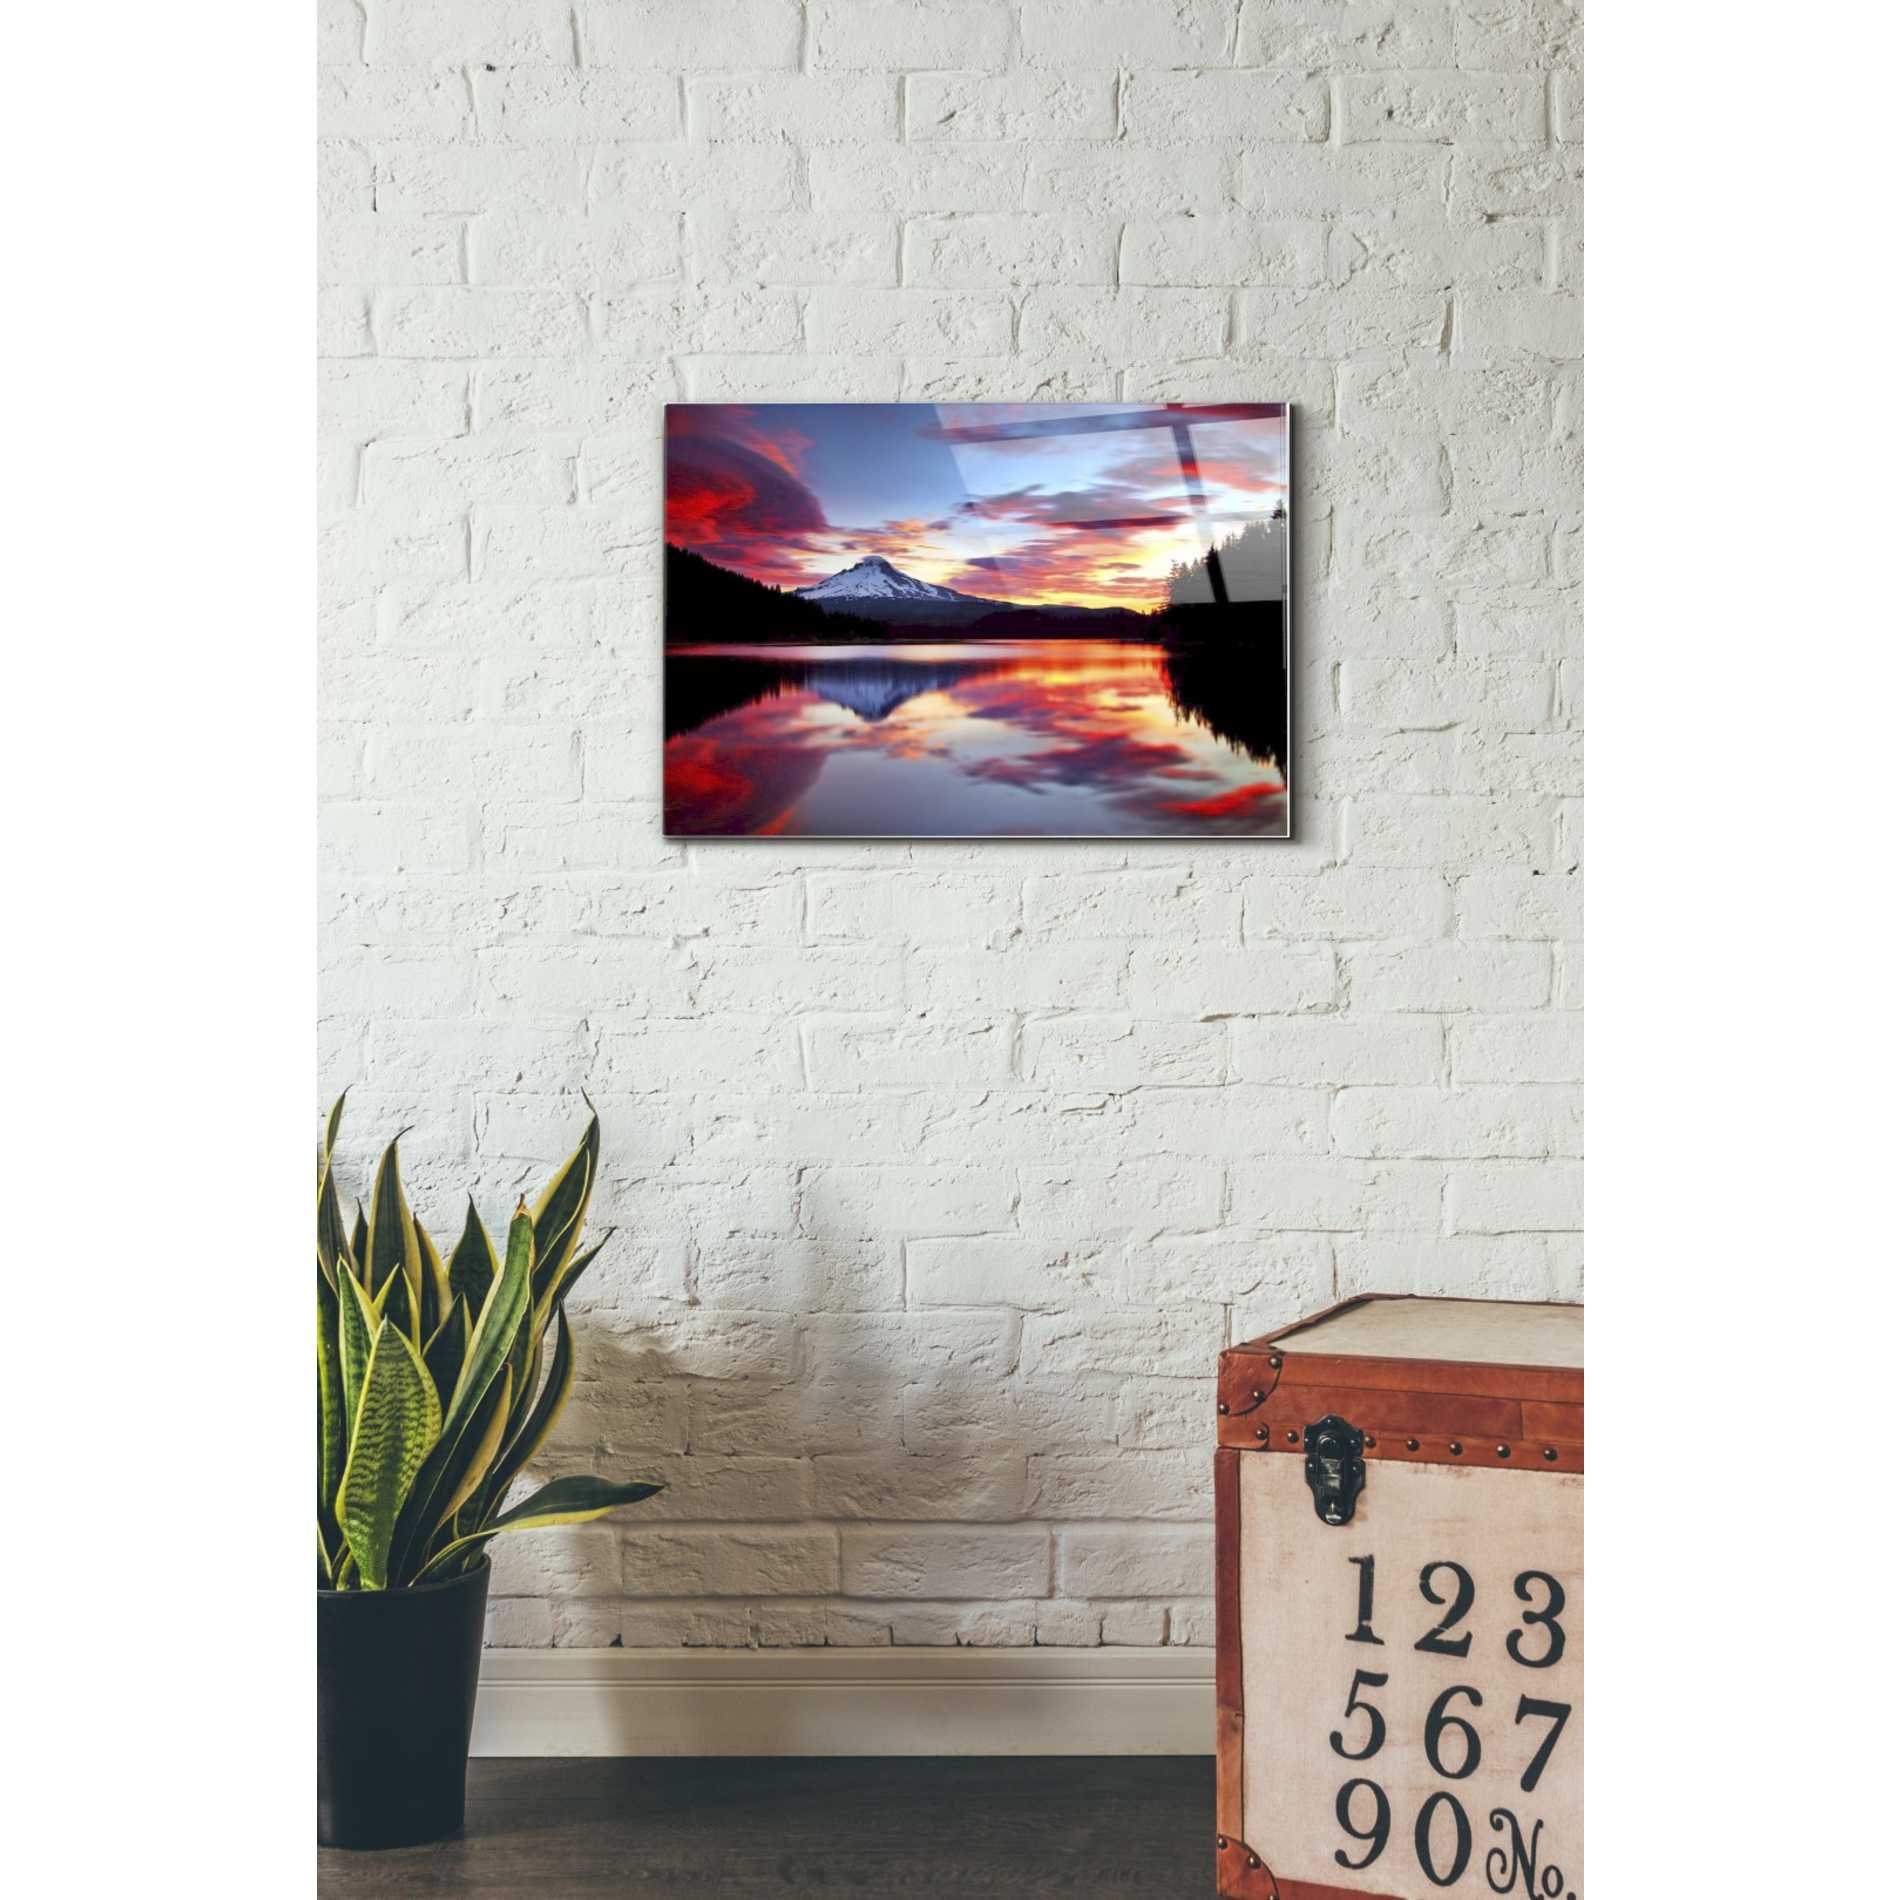 Epic Art "Sunrise on the Lake" by Darren White, Acrylic Glass Wall Art,16x24